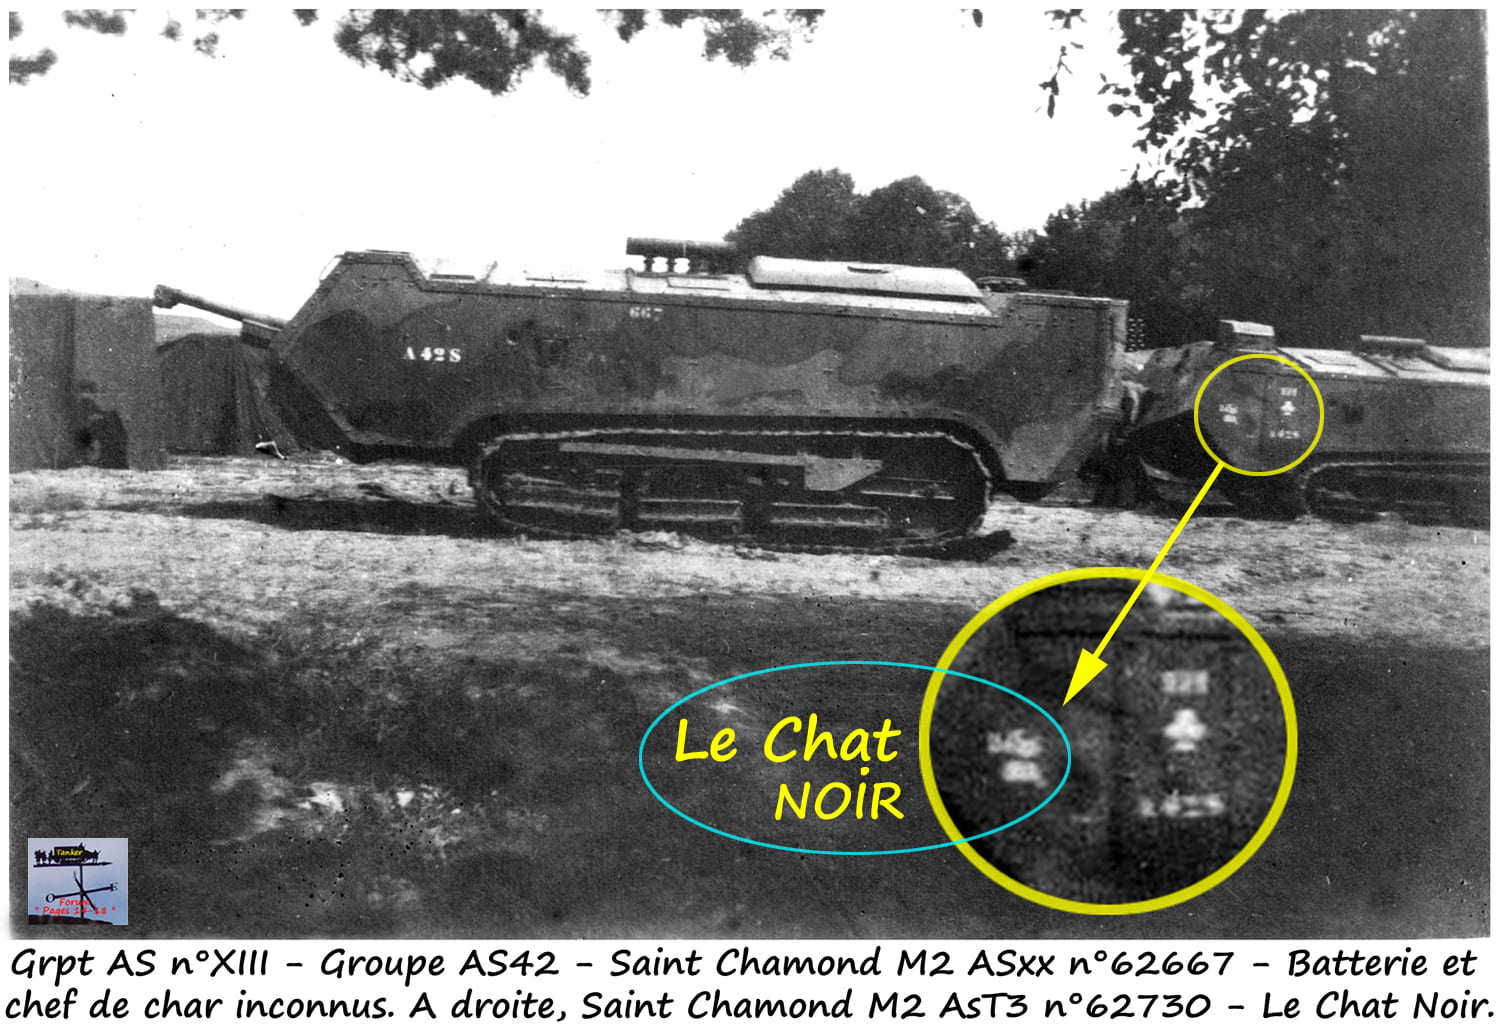 Grpt XIII - AS 42 - St Chamond M2 Asxxx n° 62667 (01) -min.jpg